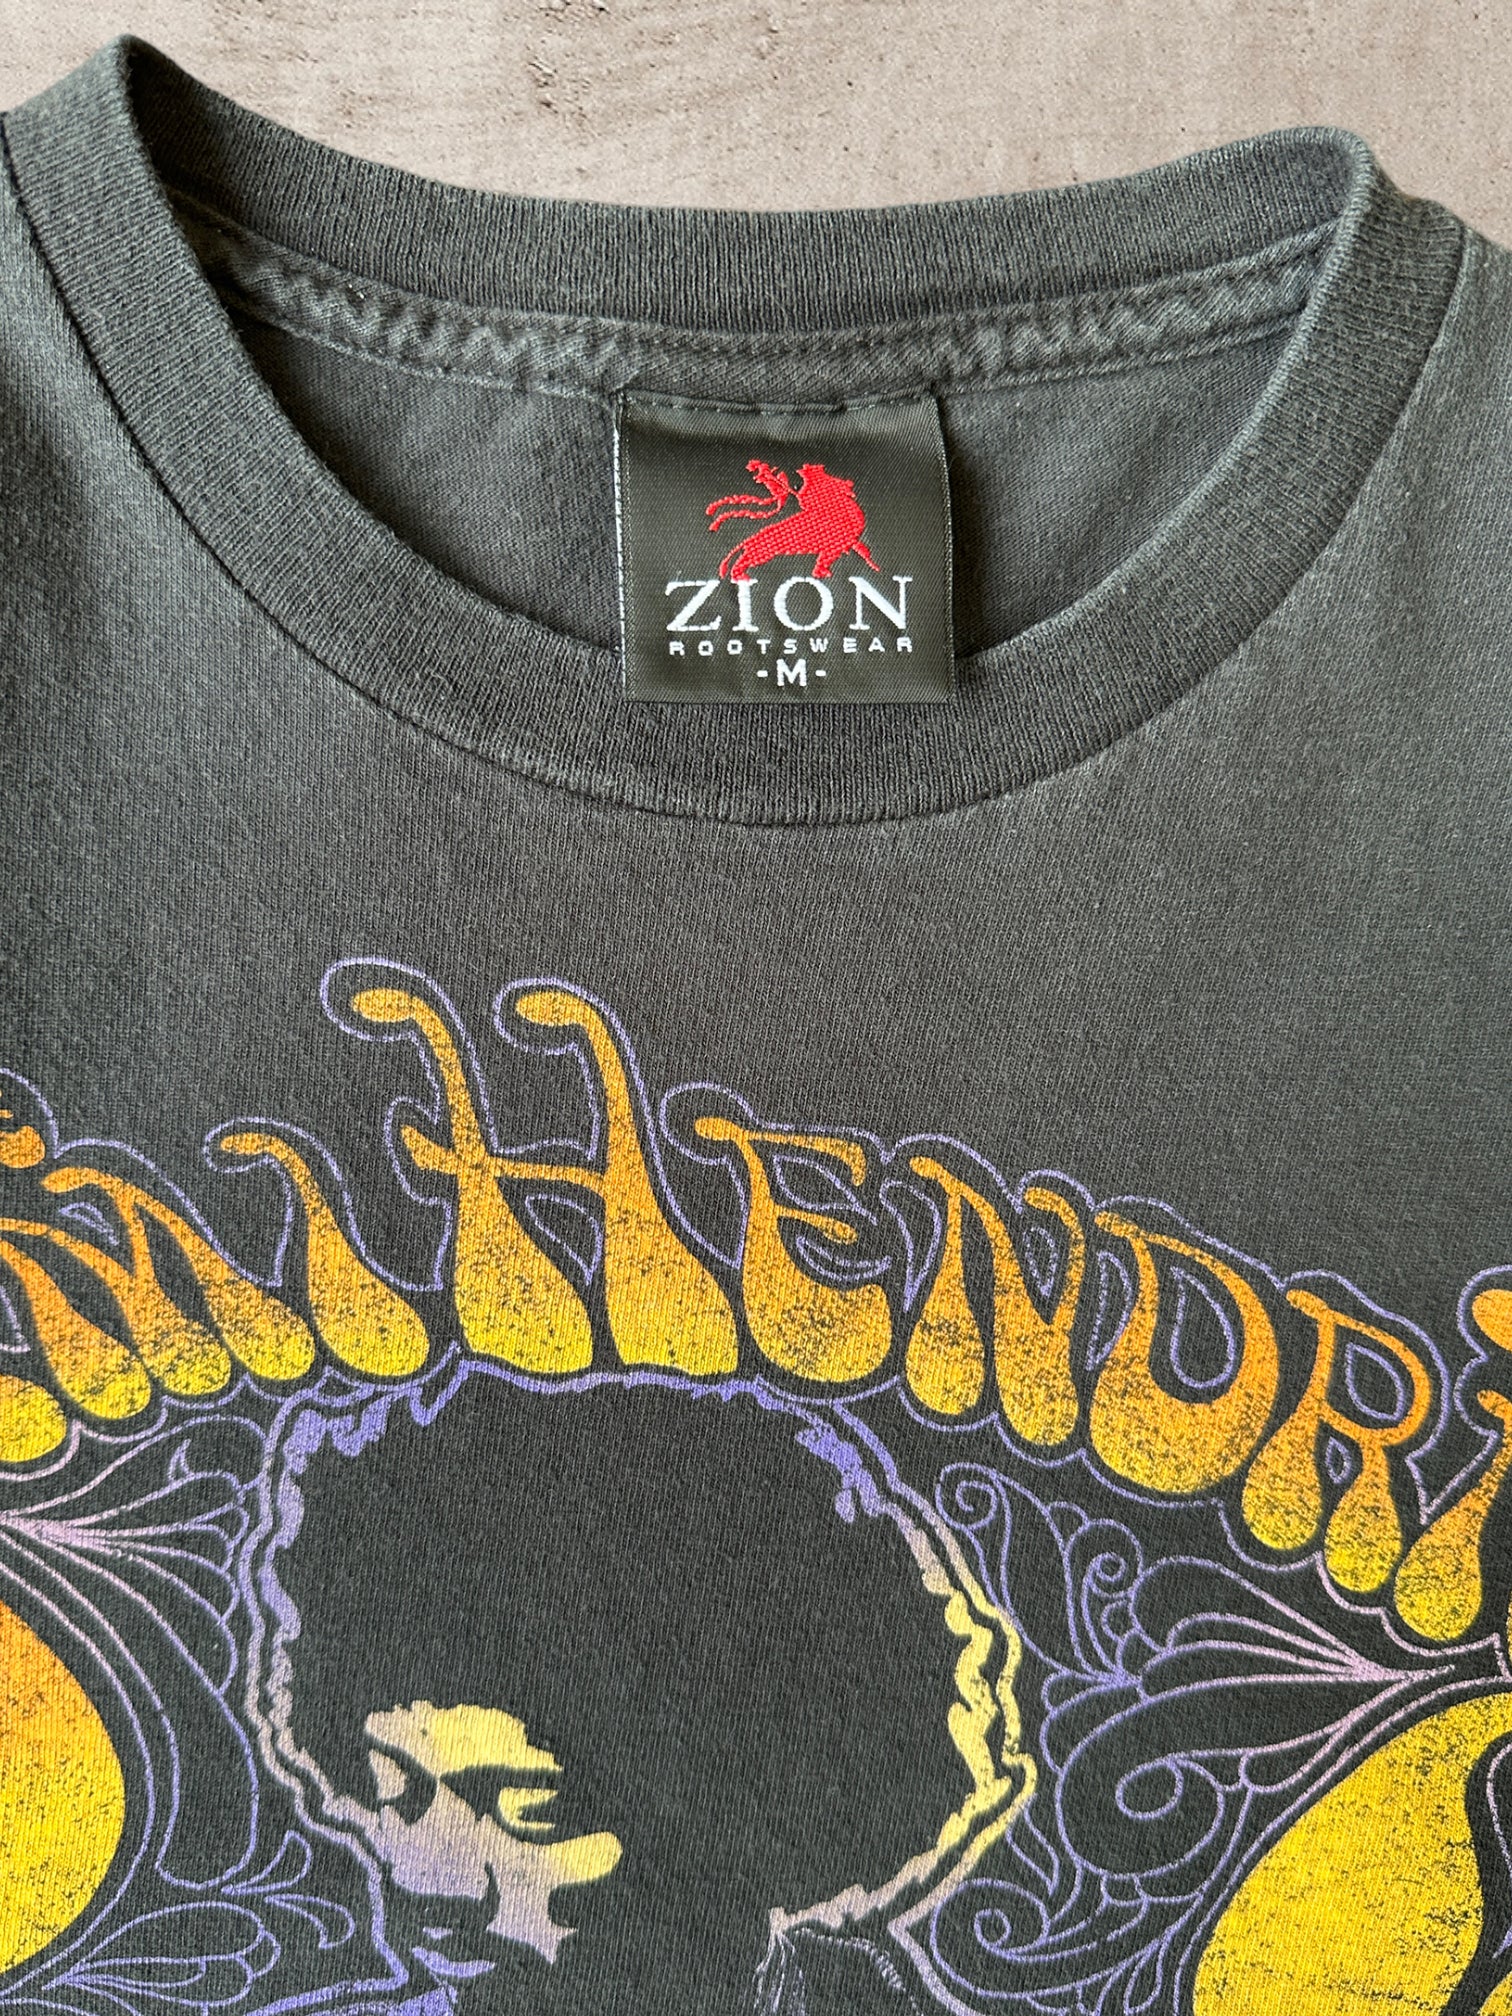 Vintage Jimmy Hendrix Experience T-Shirt - Medium